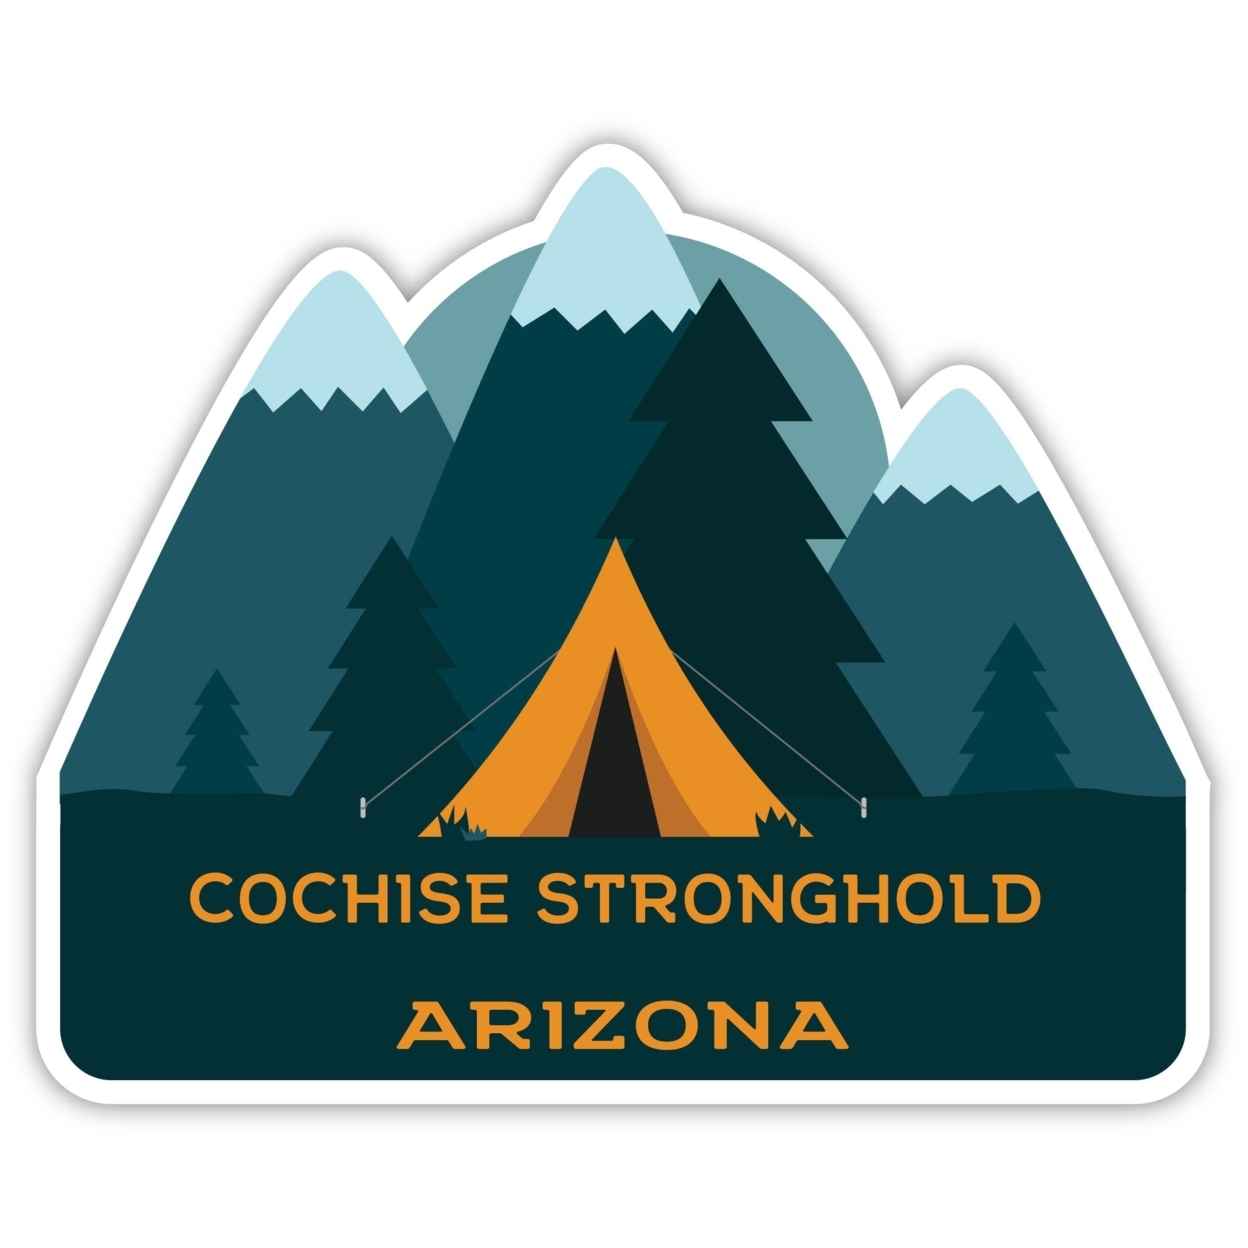 Cochise Stronghold Arizona Souvenir Decorative Stickers (Choose Theme And Size) - Single Unit, 2-Inch, Tent